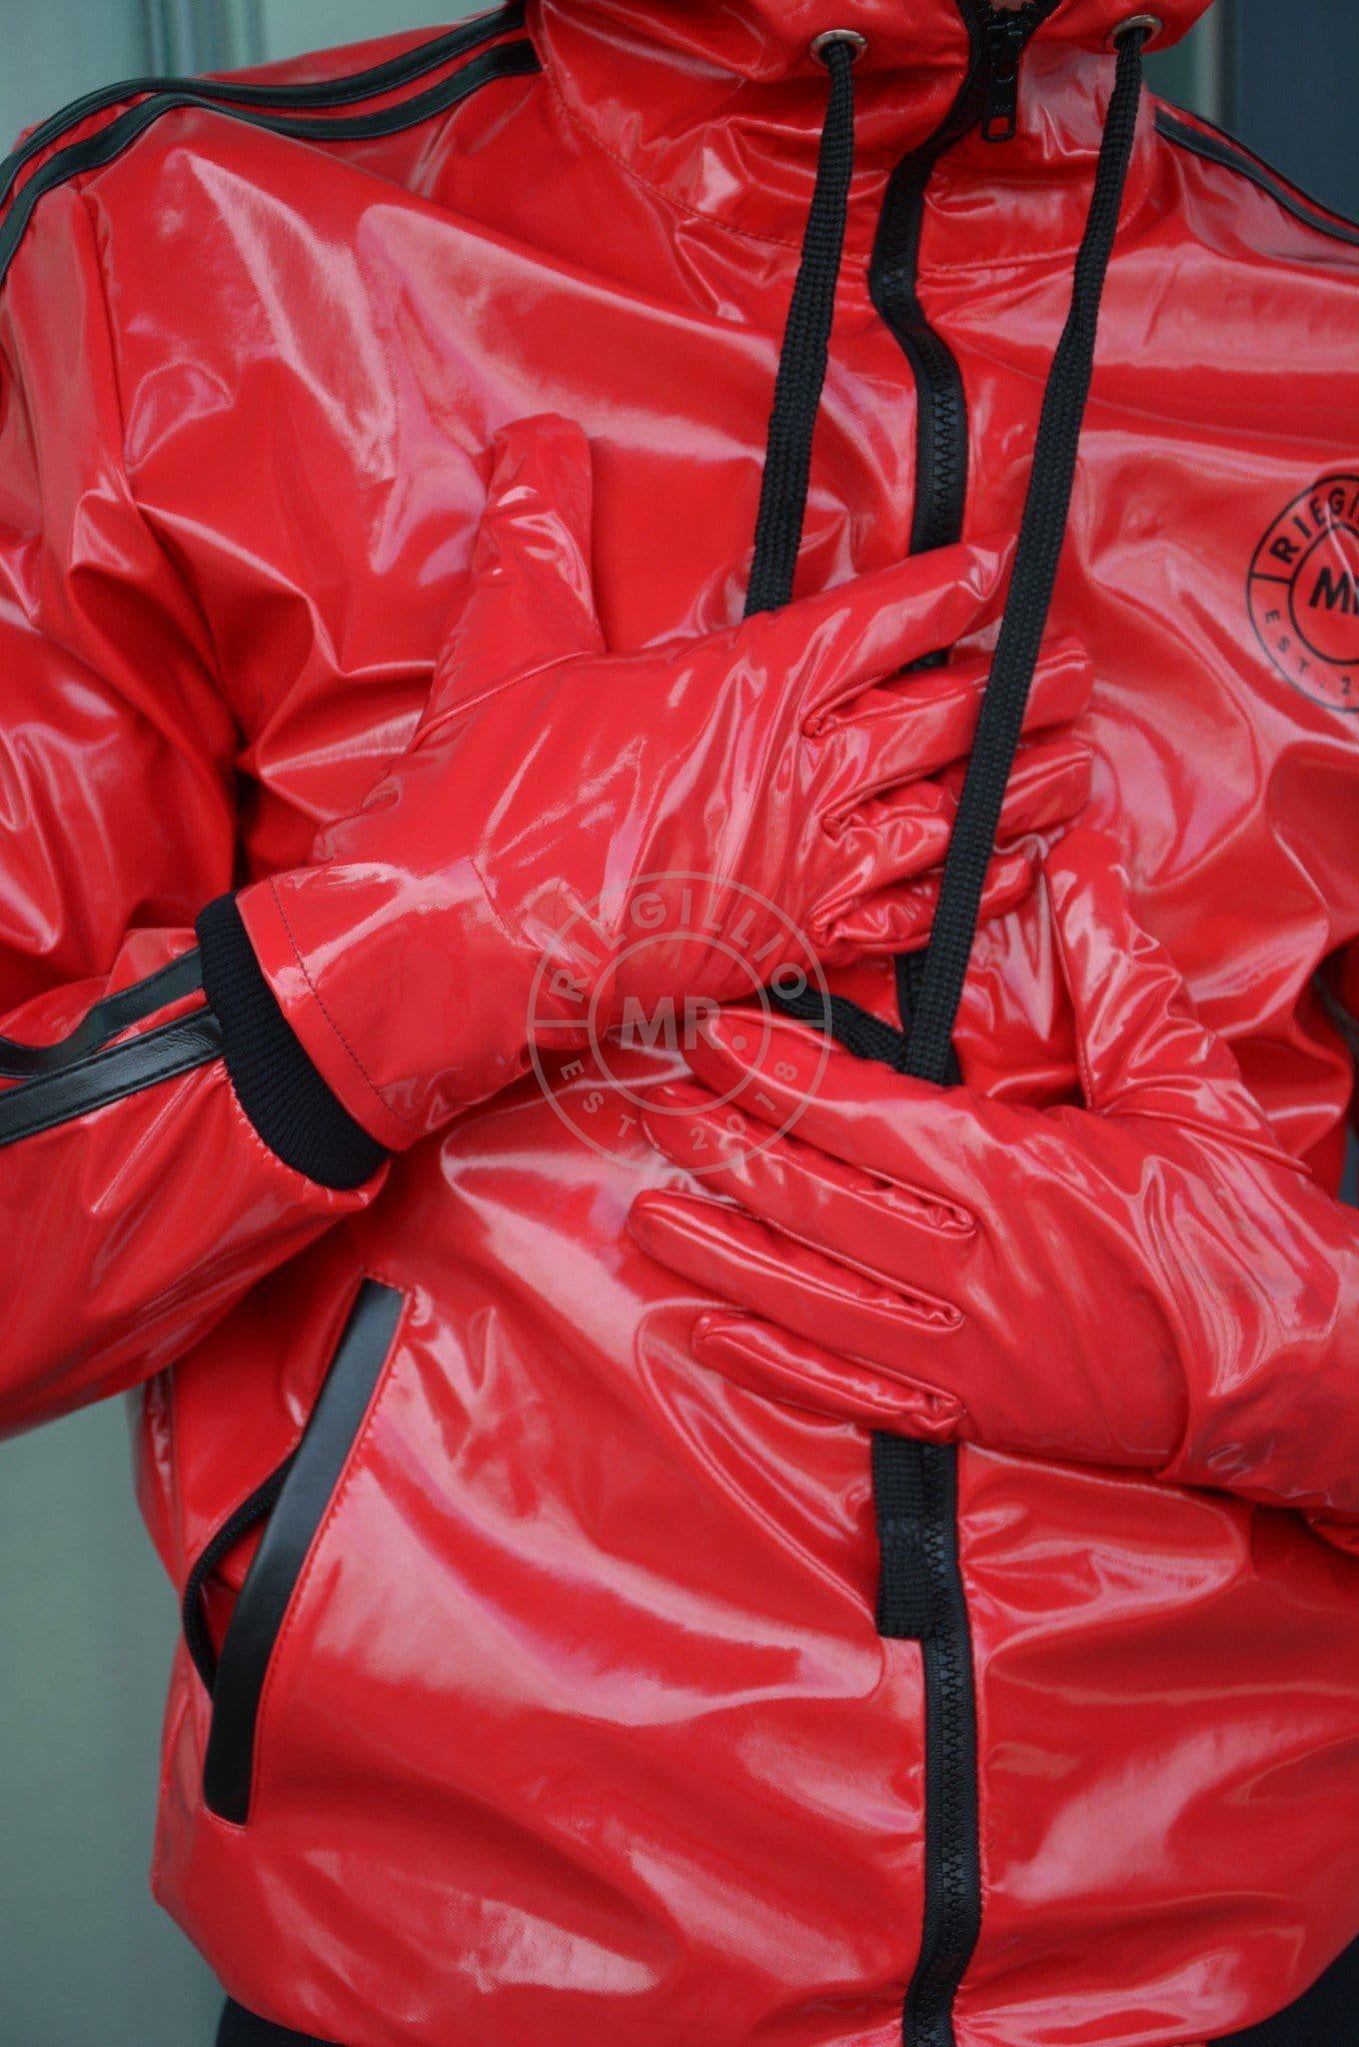 Red PVC Gloves at MR. Riegillio